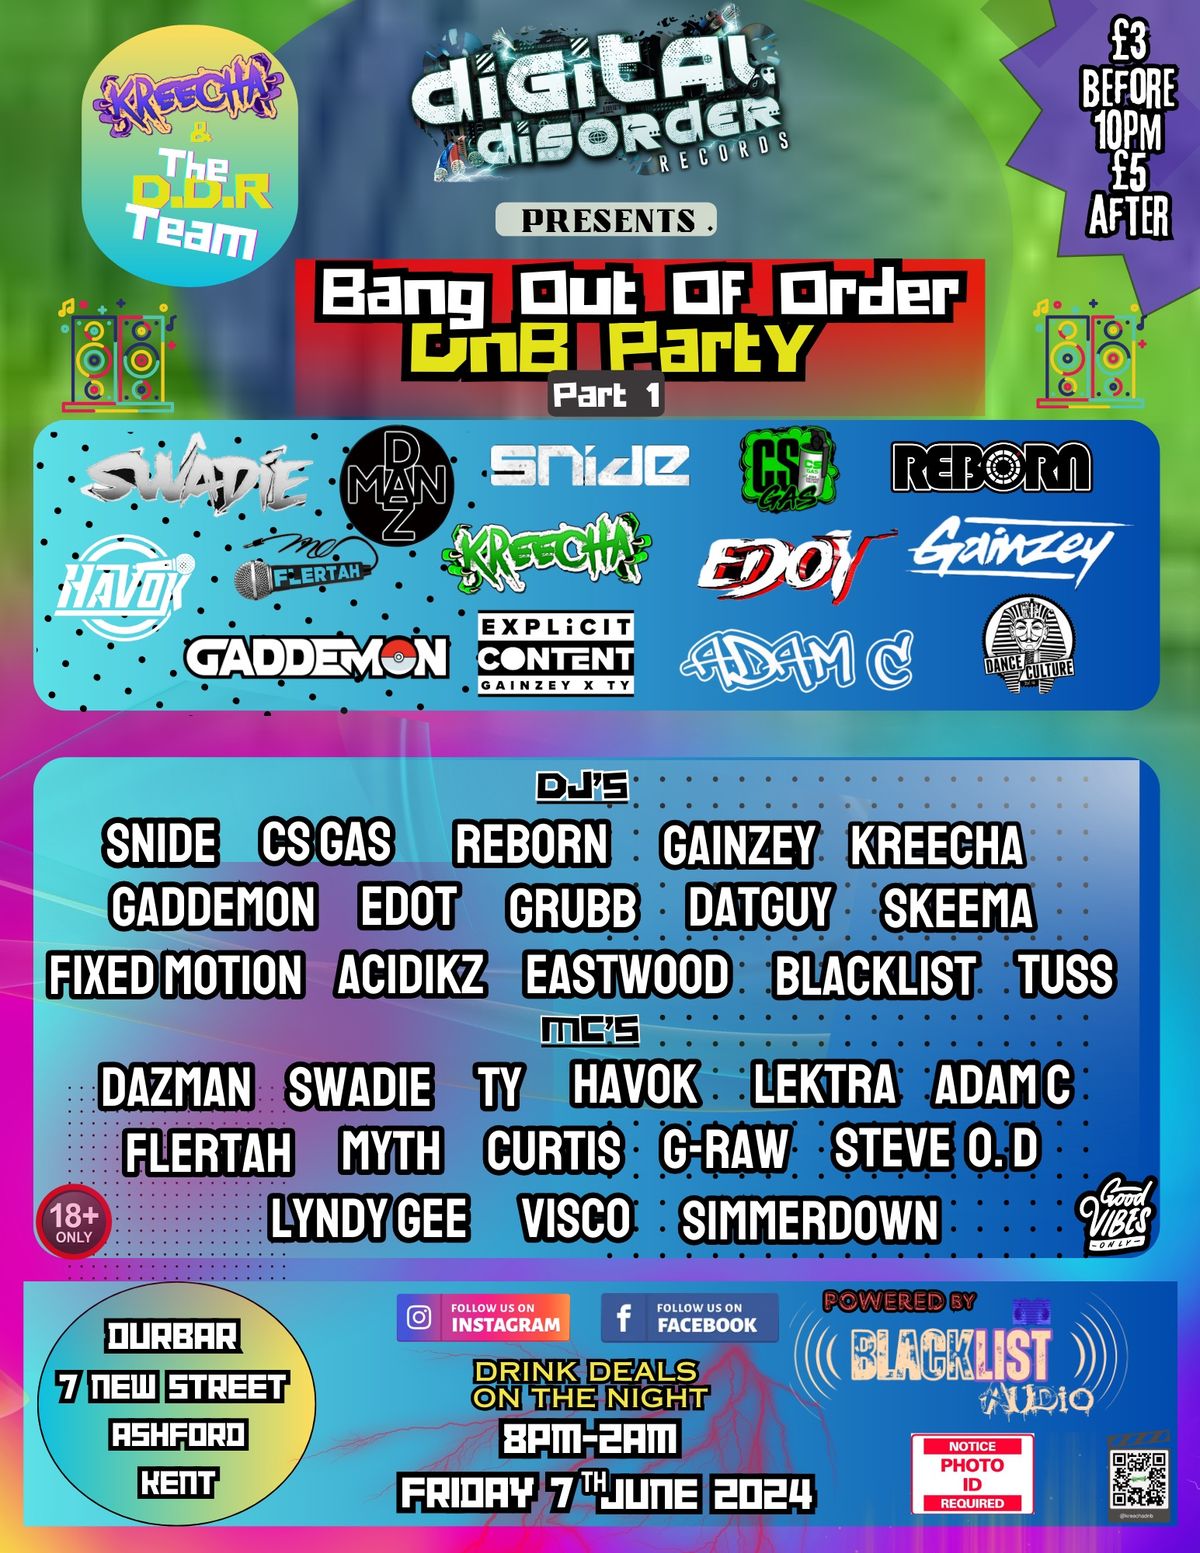 Digital Disorder Presents. Bang Out Of Order DnB Party Part 1